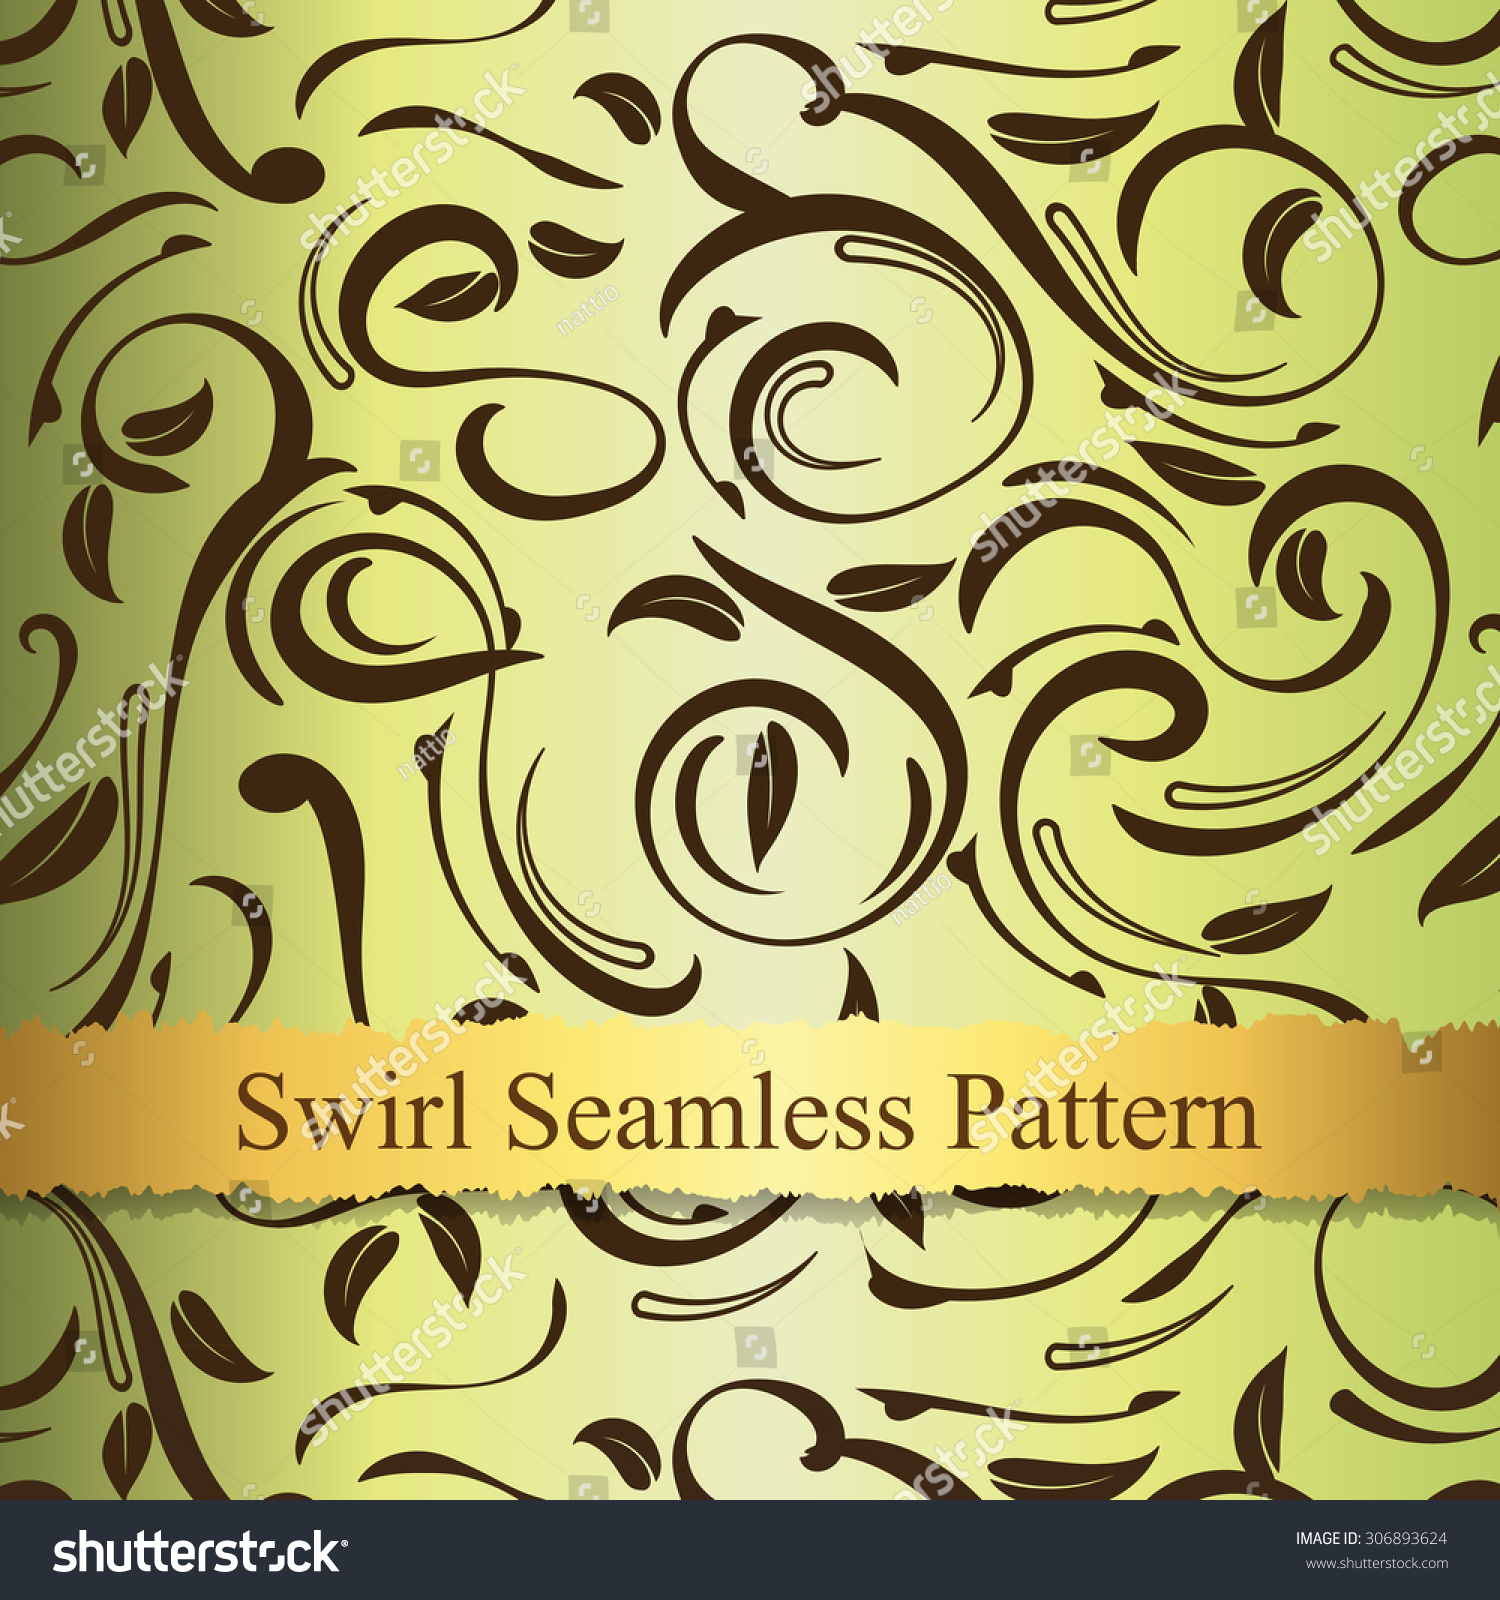 Vector Swirl Seamless Pattern - 306893624 : Shutterstock